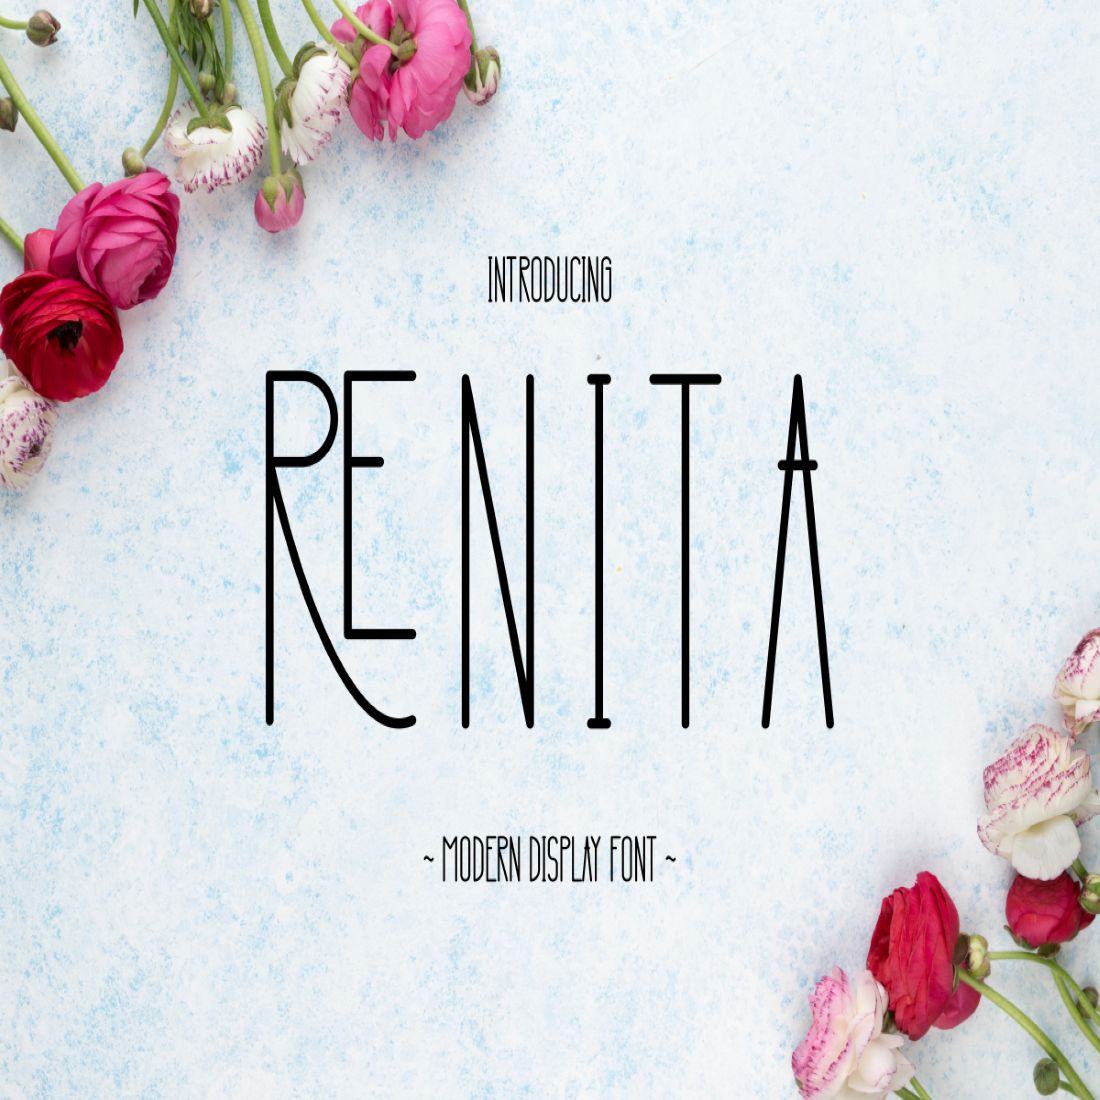 Renita - Modern Display Font cover image.